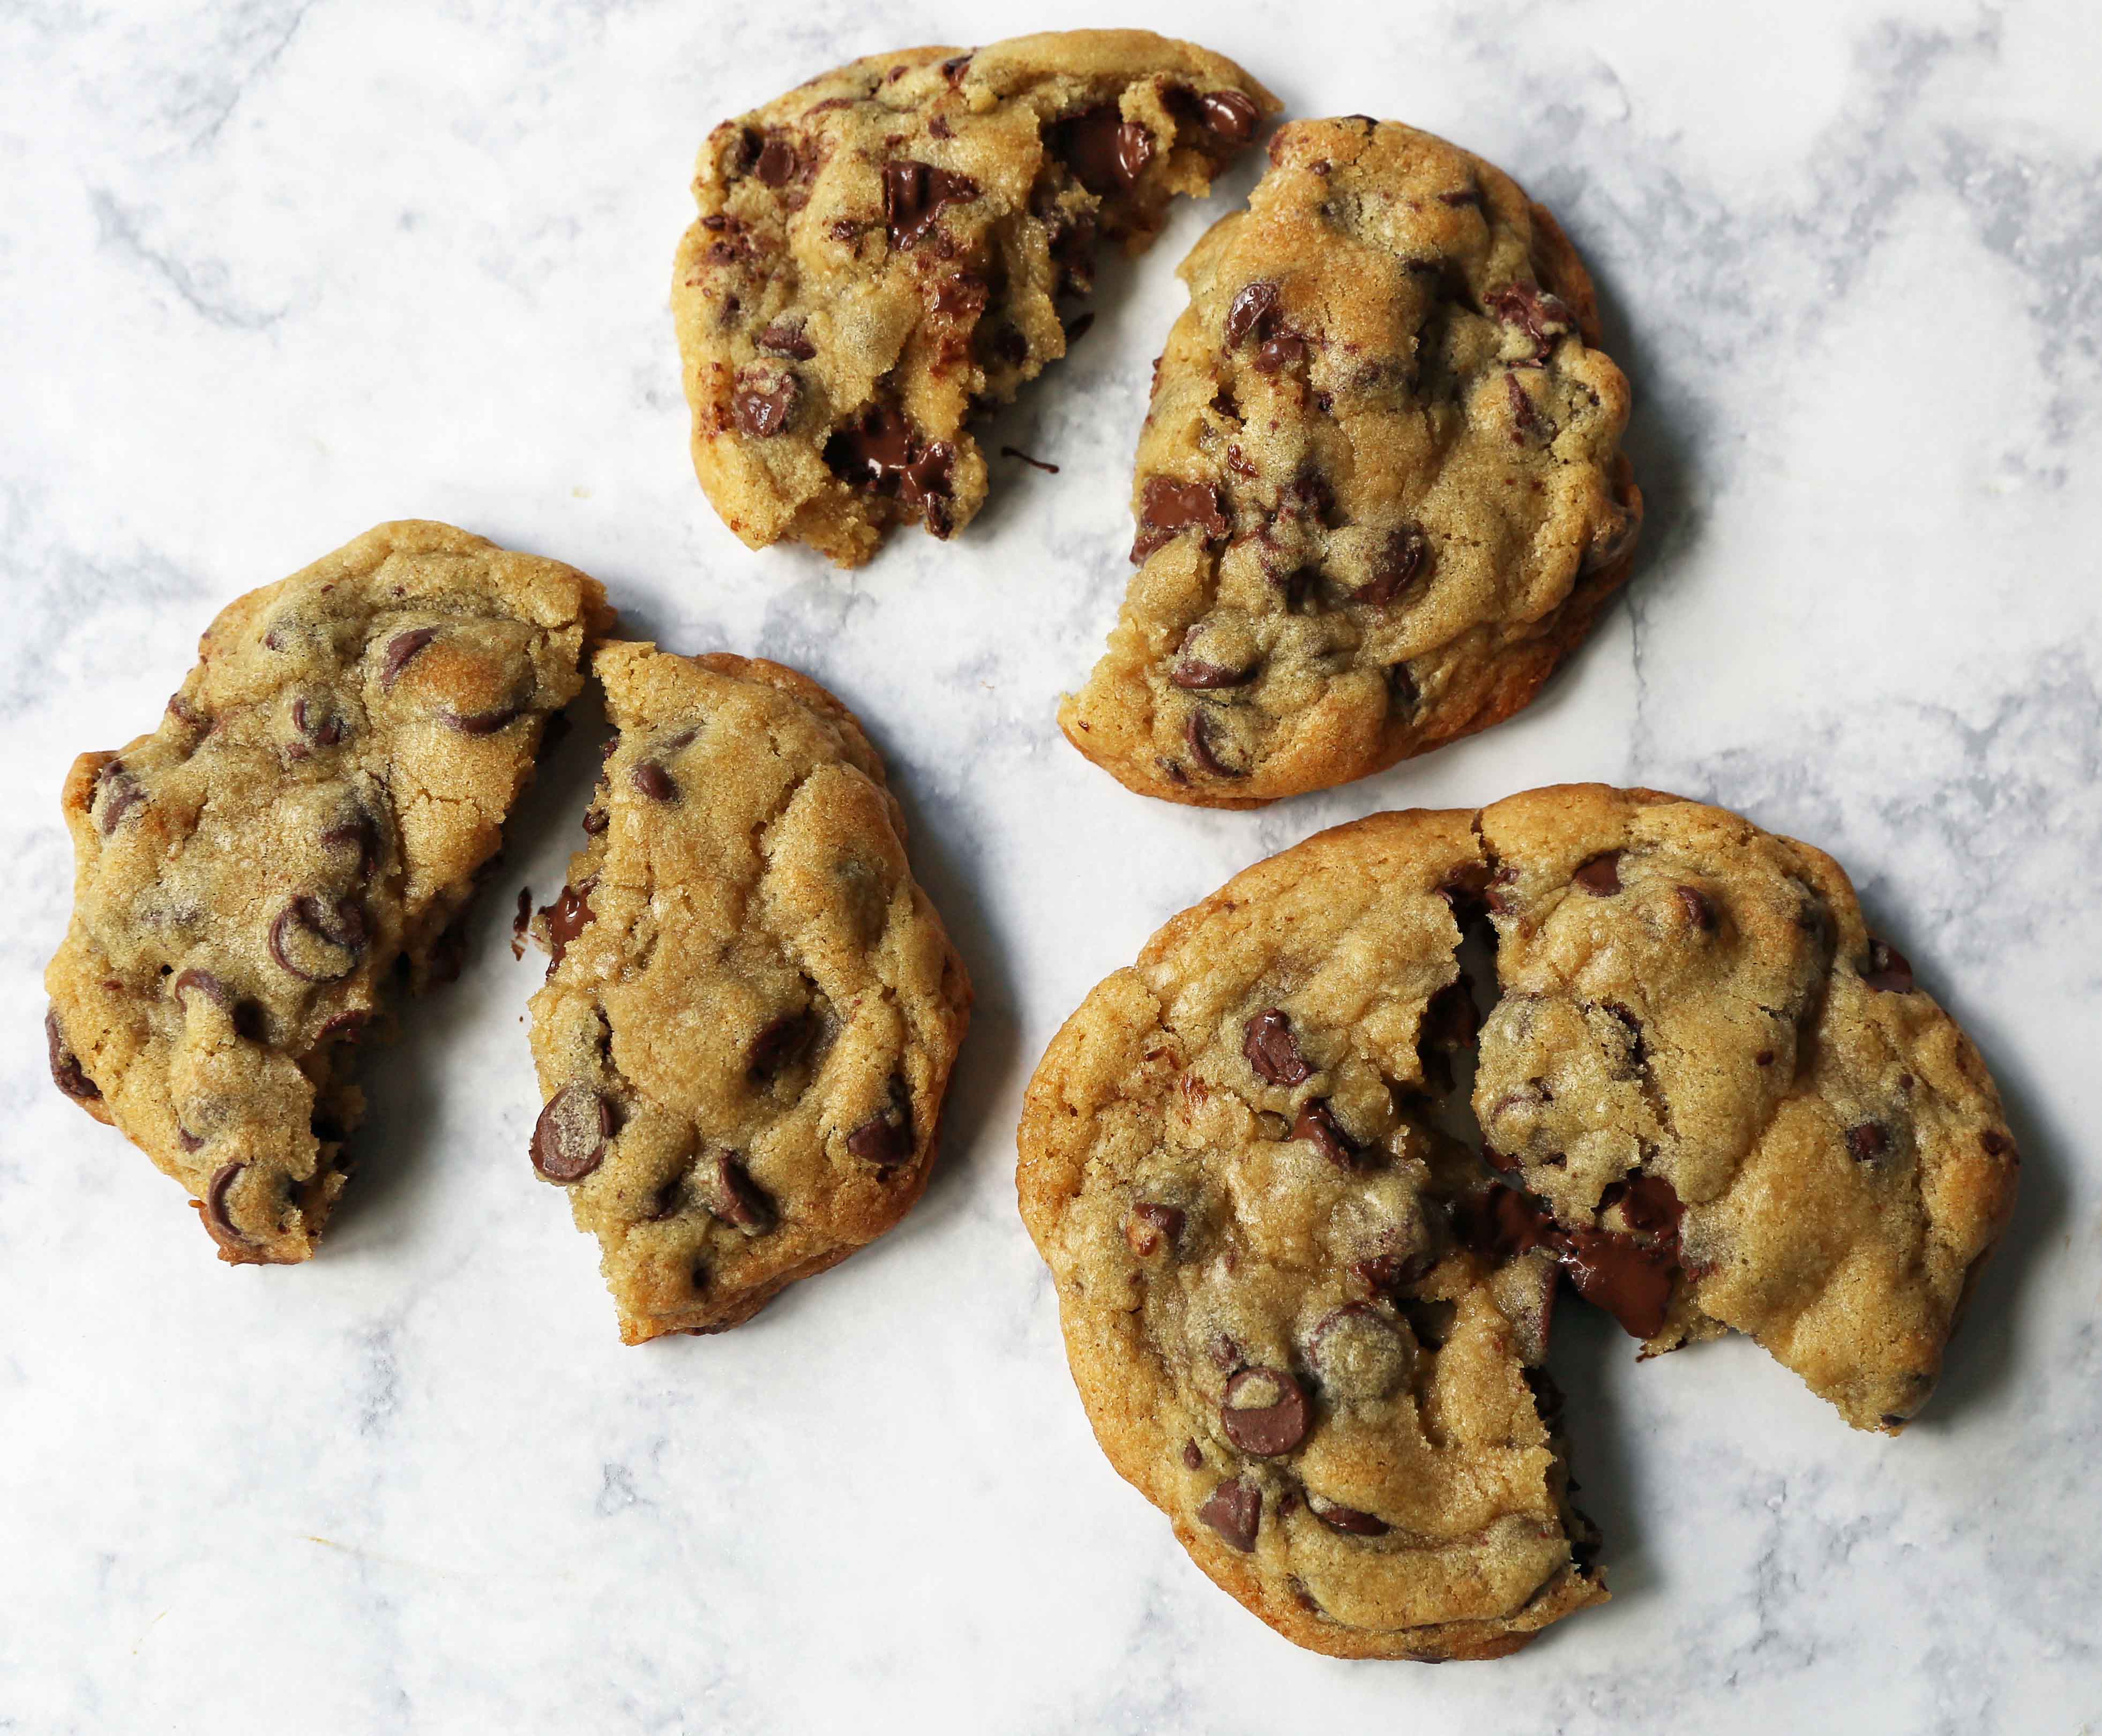 https://www.modernhoney.com/wp-content/uploads/2019/01/The-Best-Chocolate-Chip-Cookies-6.jpg